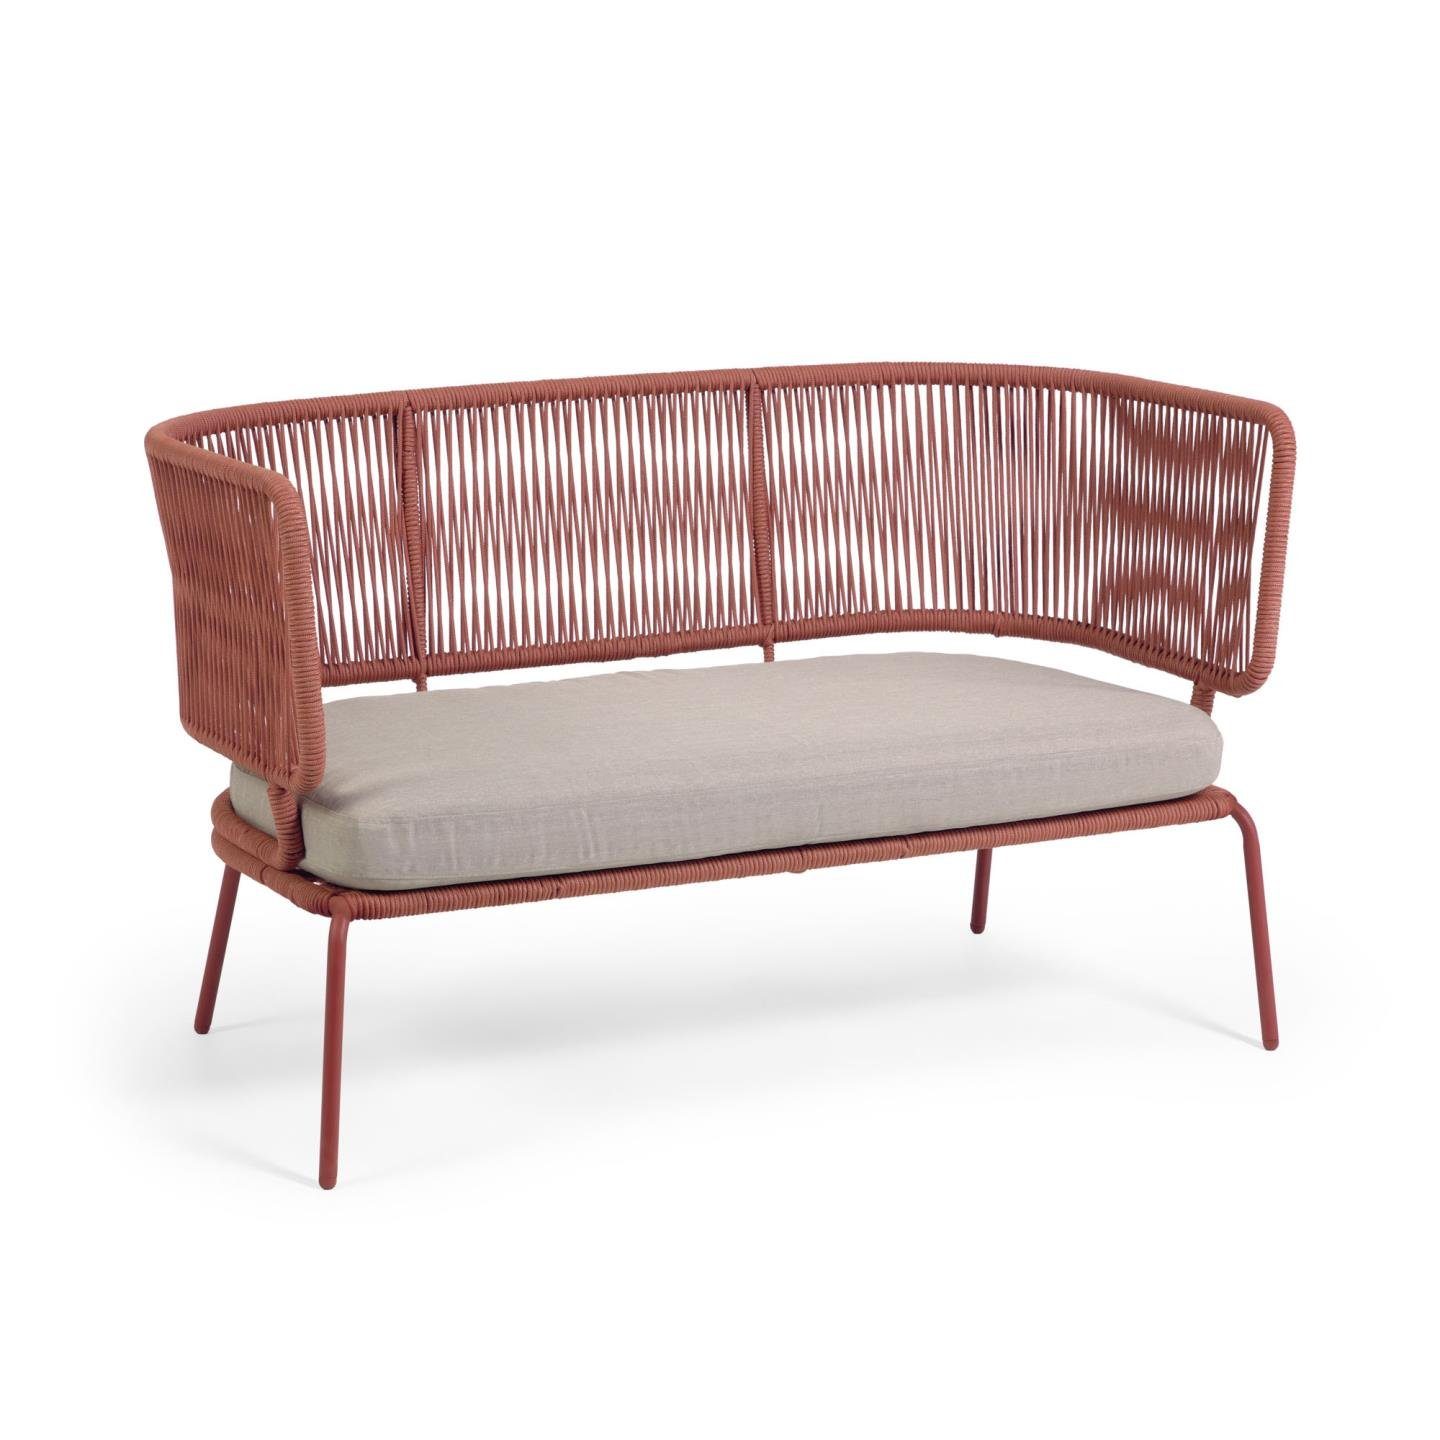 Terrakotta-Farbe Natur24 Nadin Sofa Couch mit Seil 135cm in 2-Sitzer Sofa